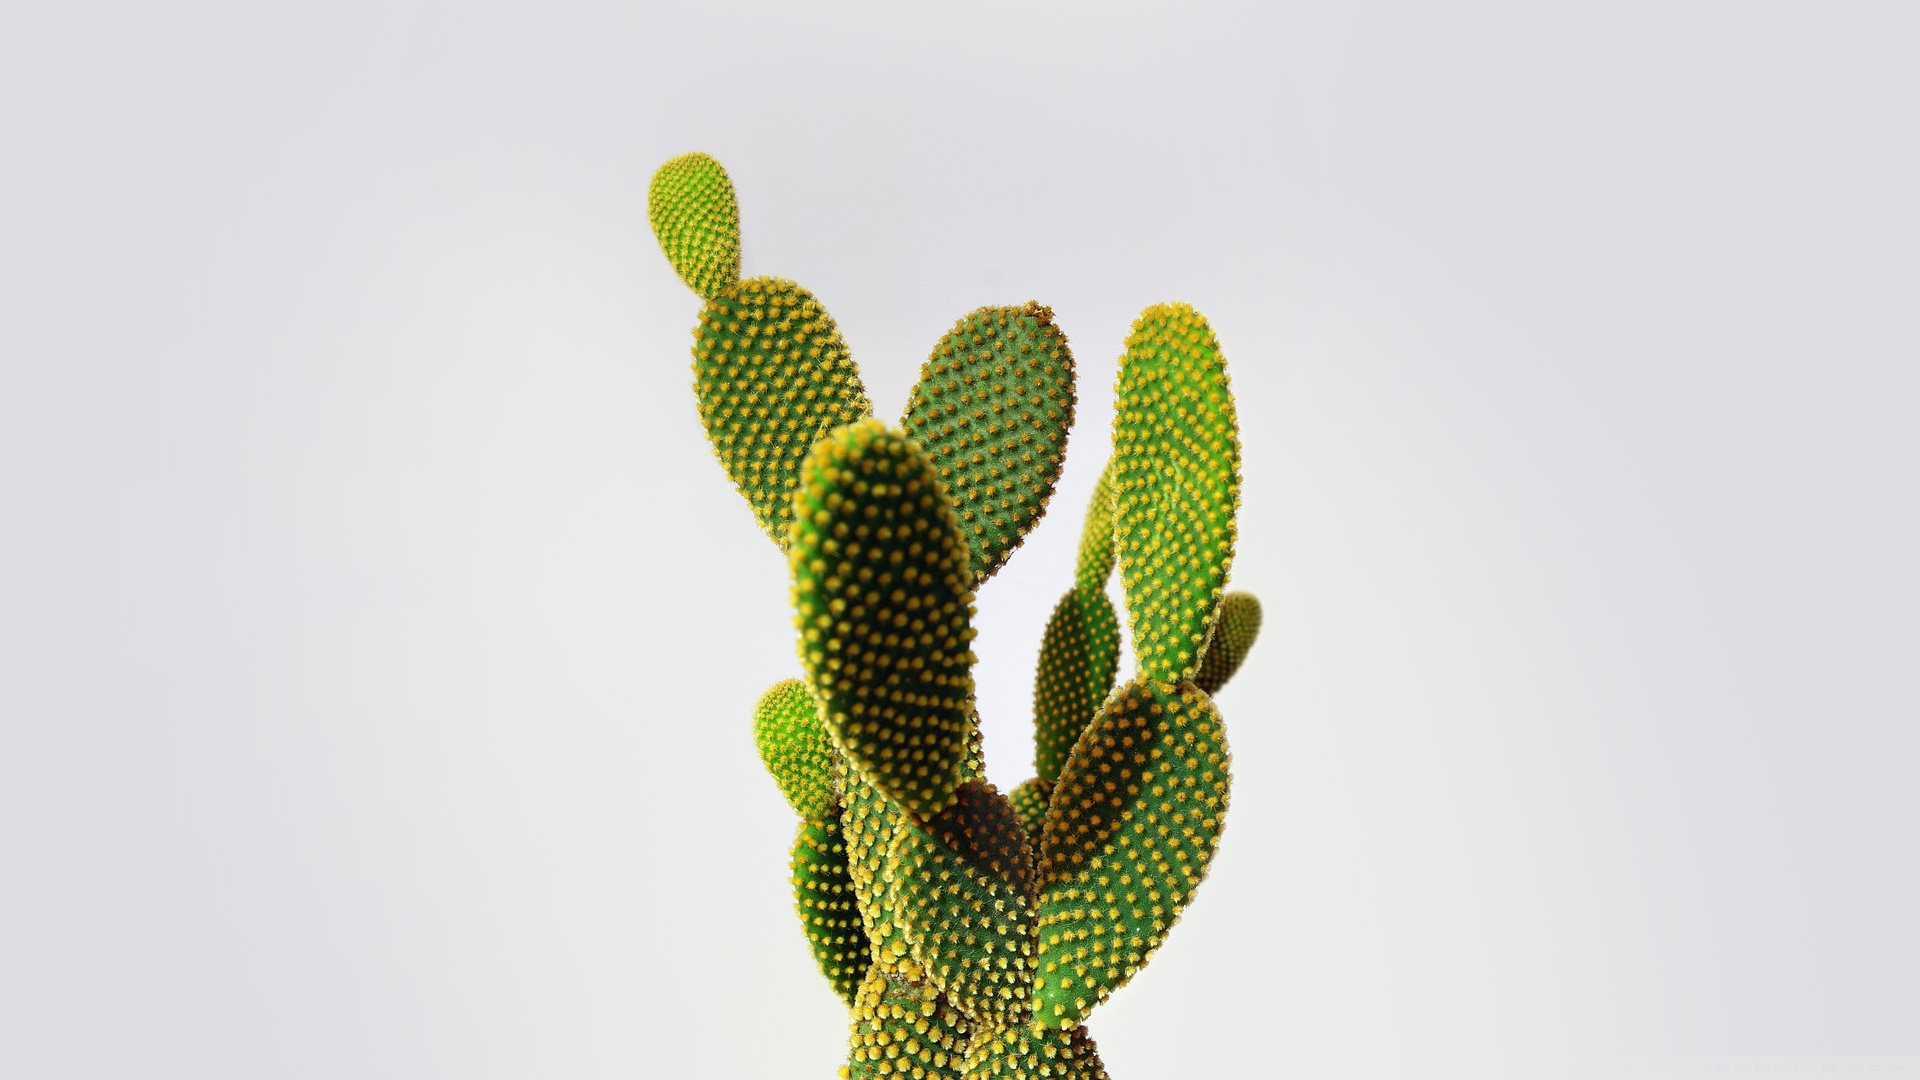 Interesting Shape Of Cactus Leaves